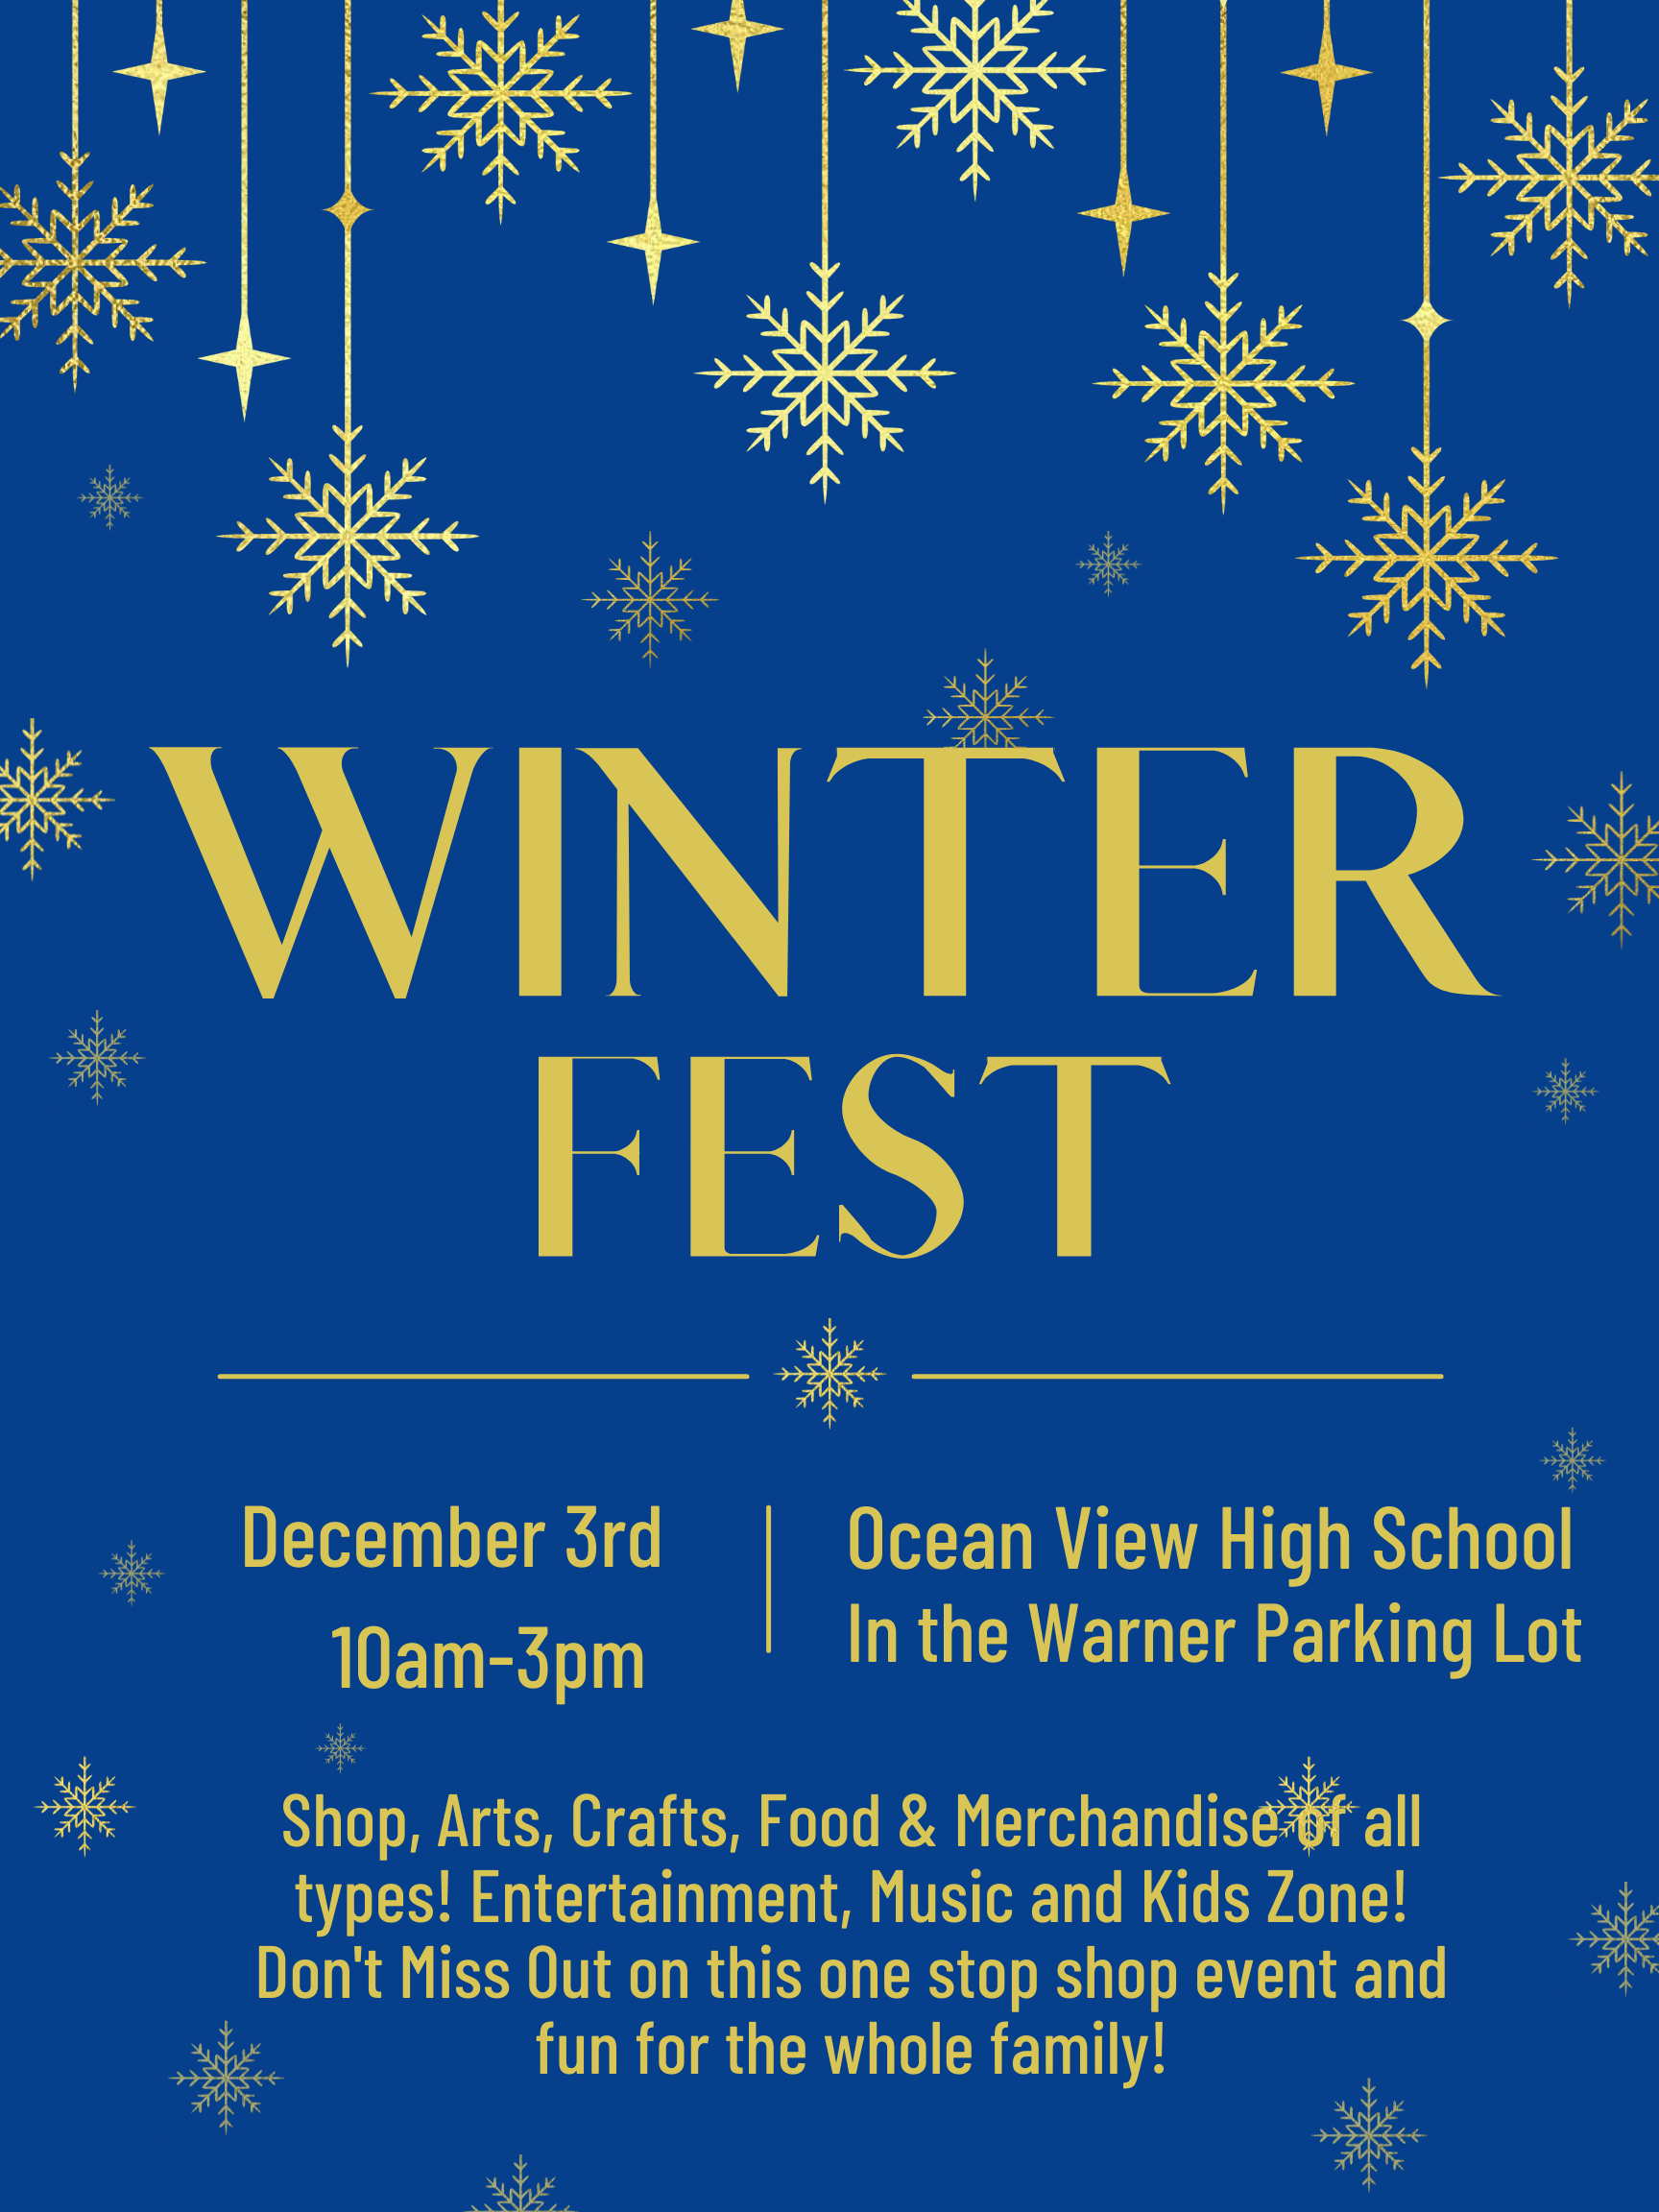 OVHS Winterfest is on December 3rd